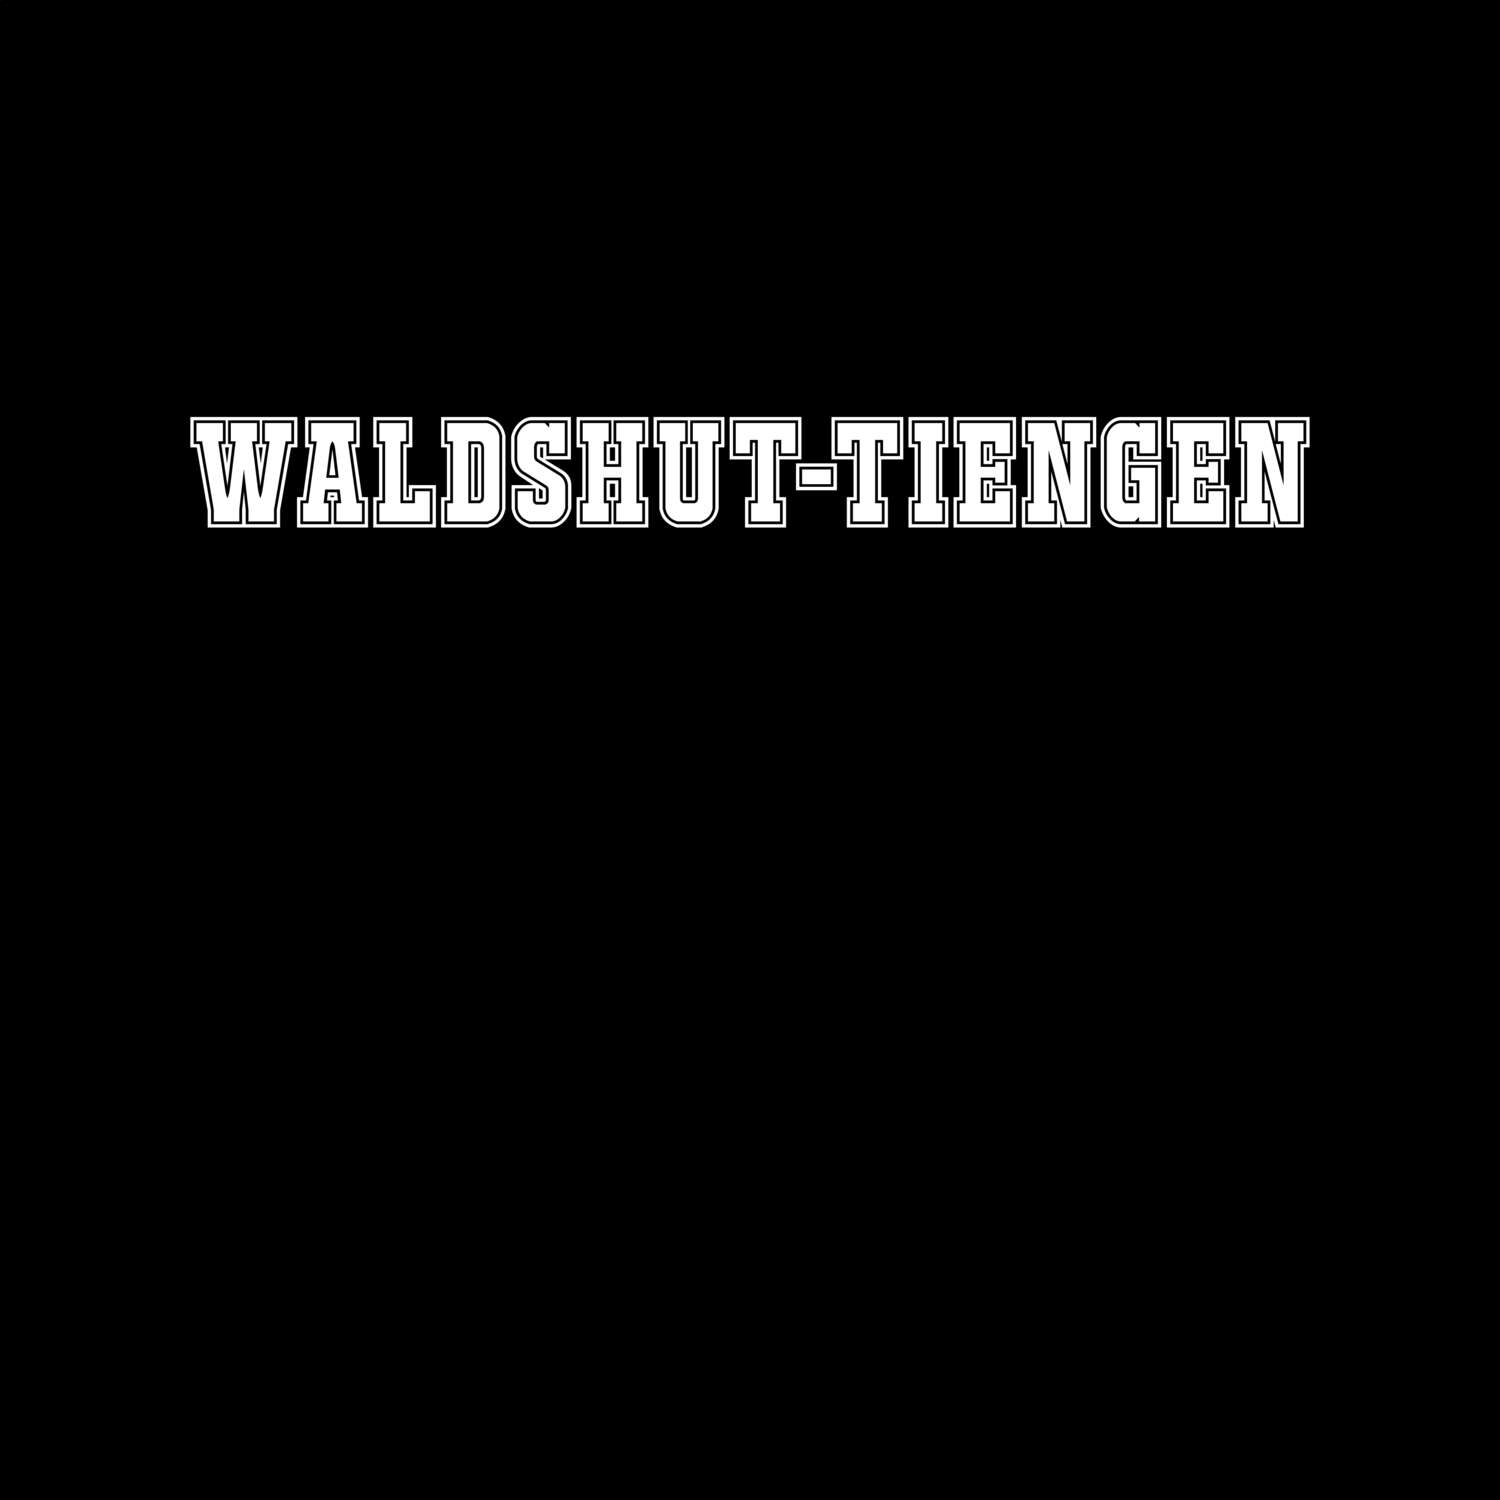 Waldshut-Tiengen T-Shirt »Classic«